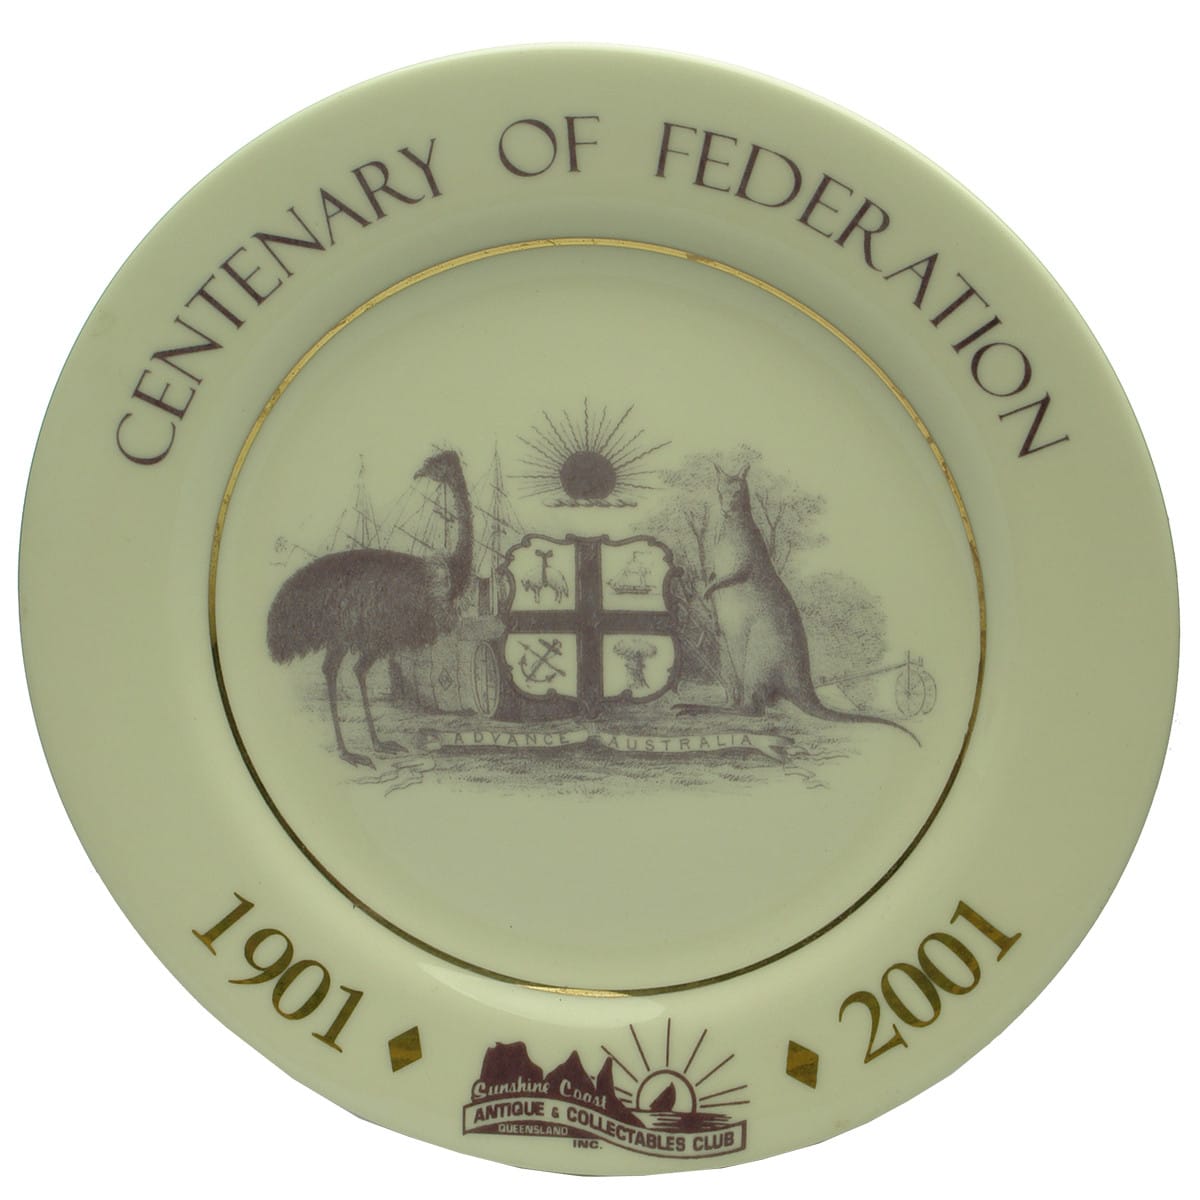 Commemorative Plate. Sunshine Coast Antique & Collectables Club. Centenary of Federation. 1901 - 2001.